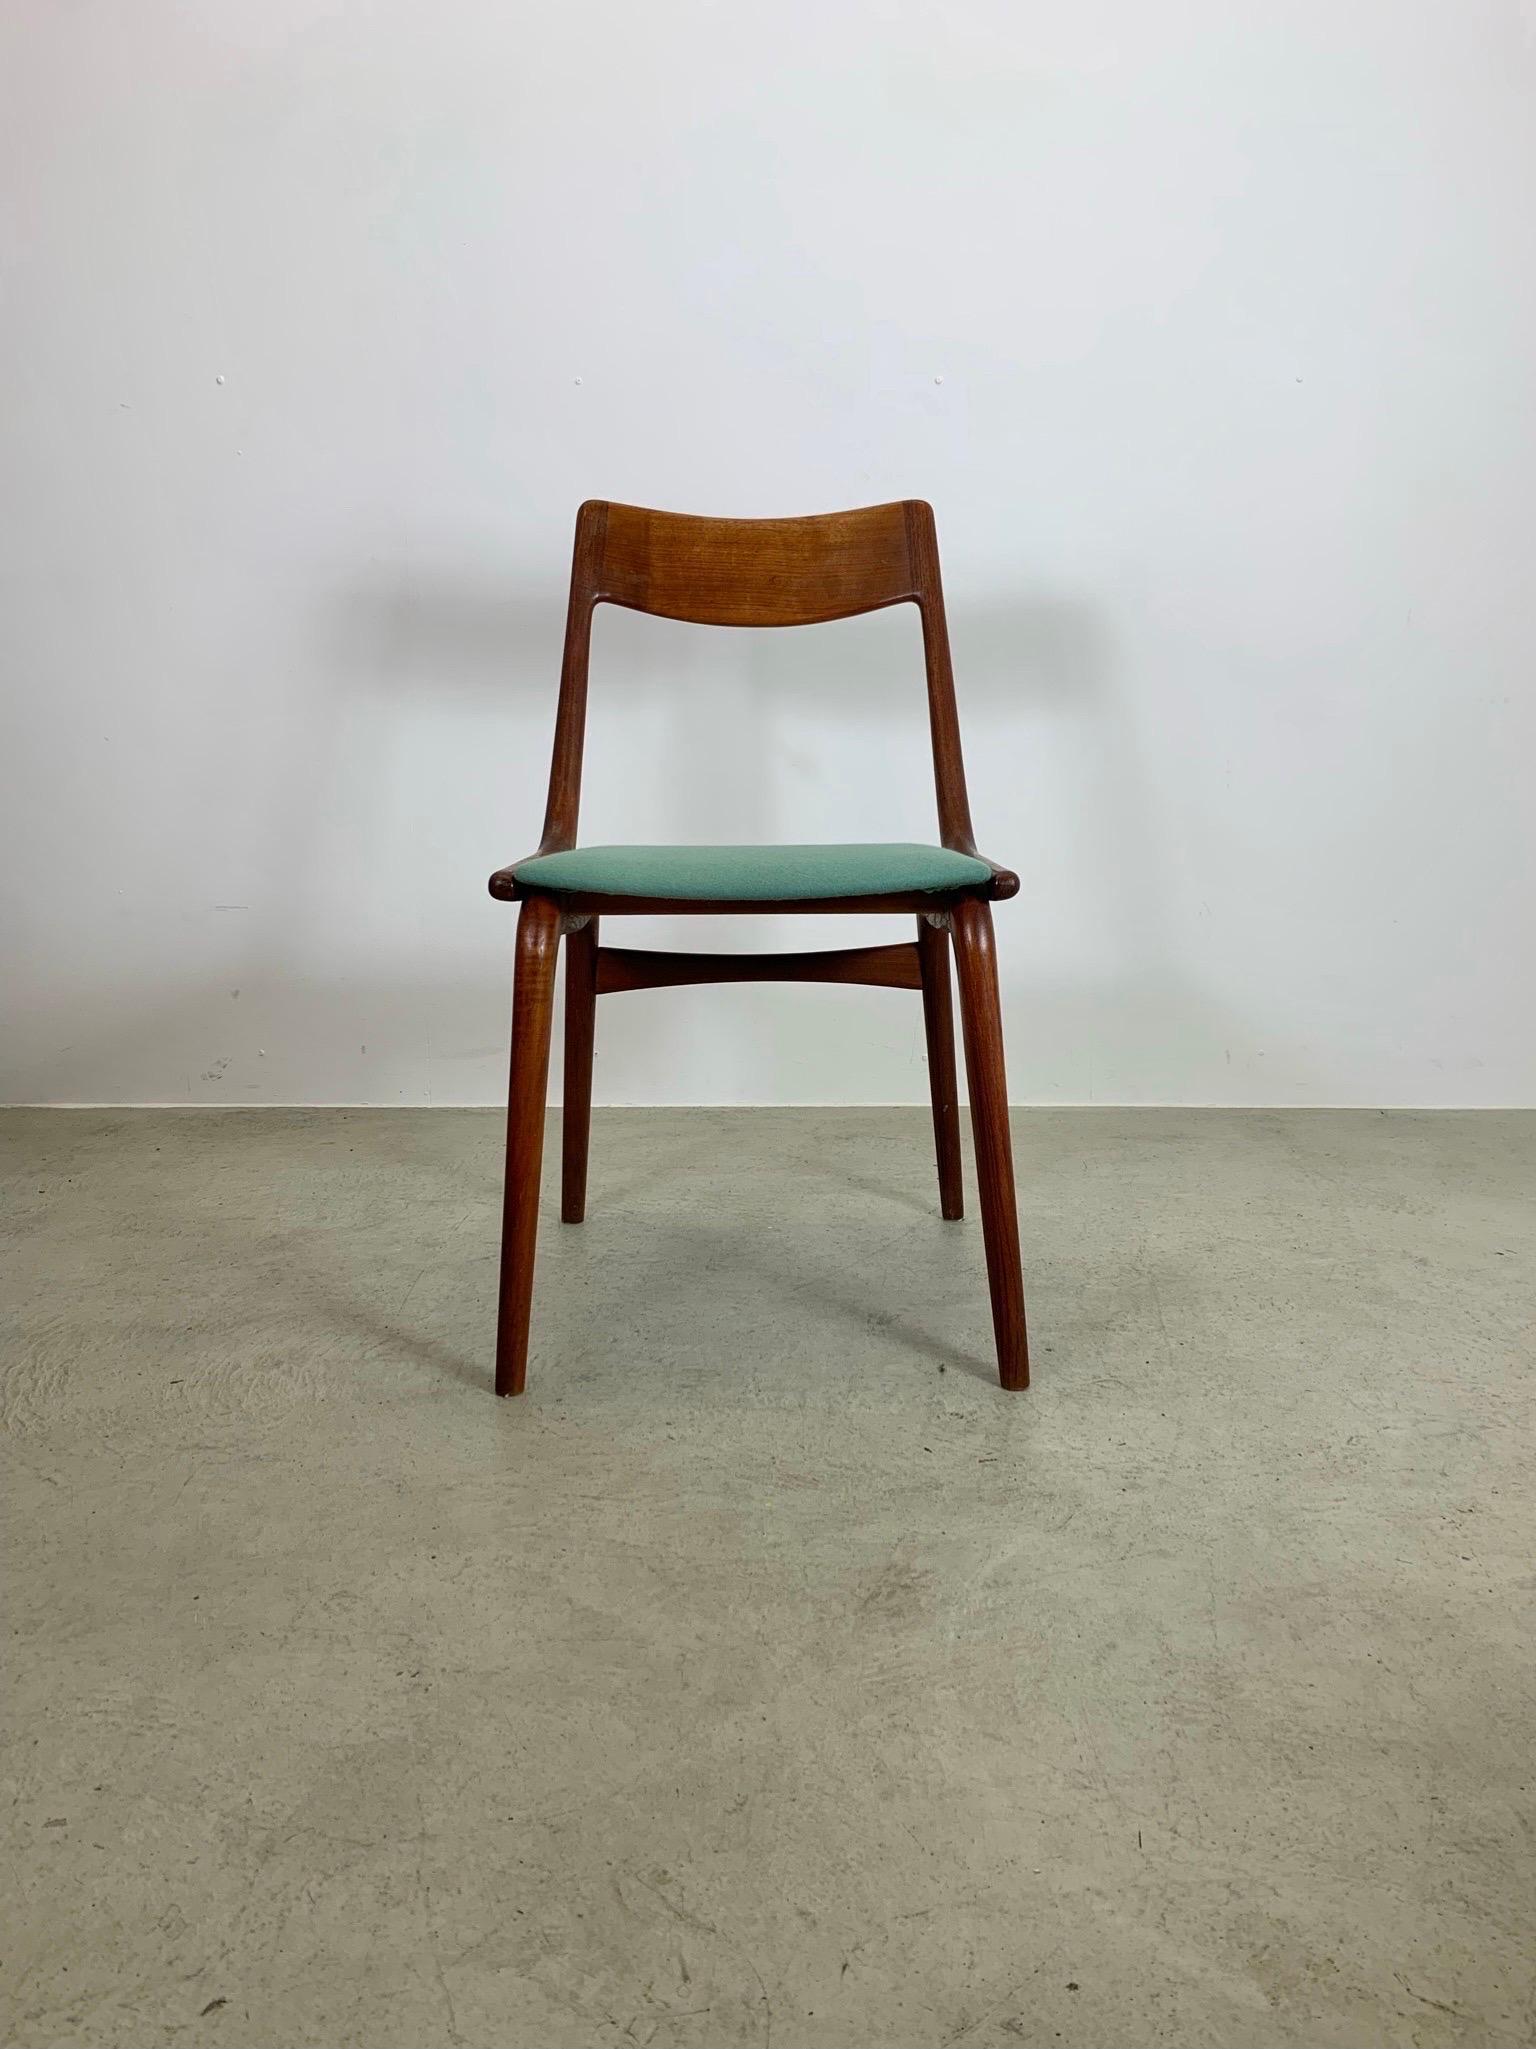 4x Danish Teak Boomerang Chairs by Alfred Christensen, 1950s restored For Sale 5